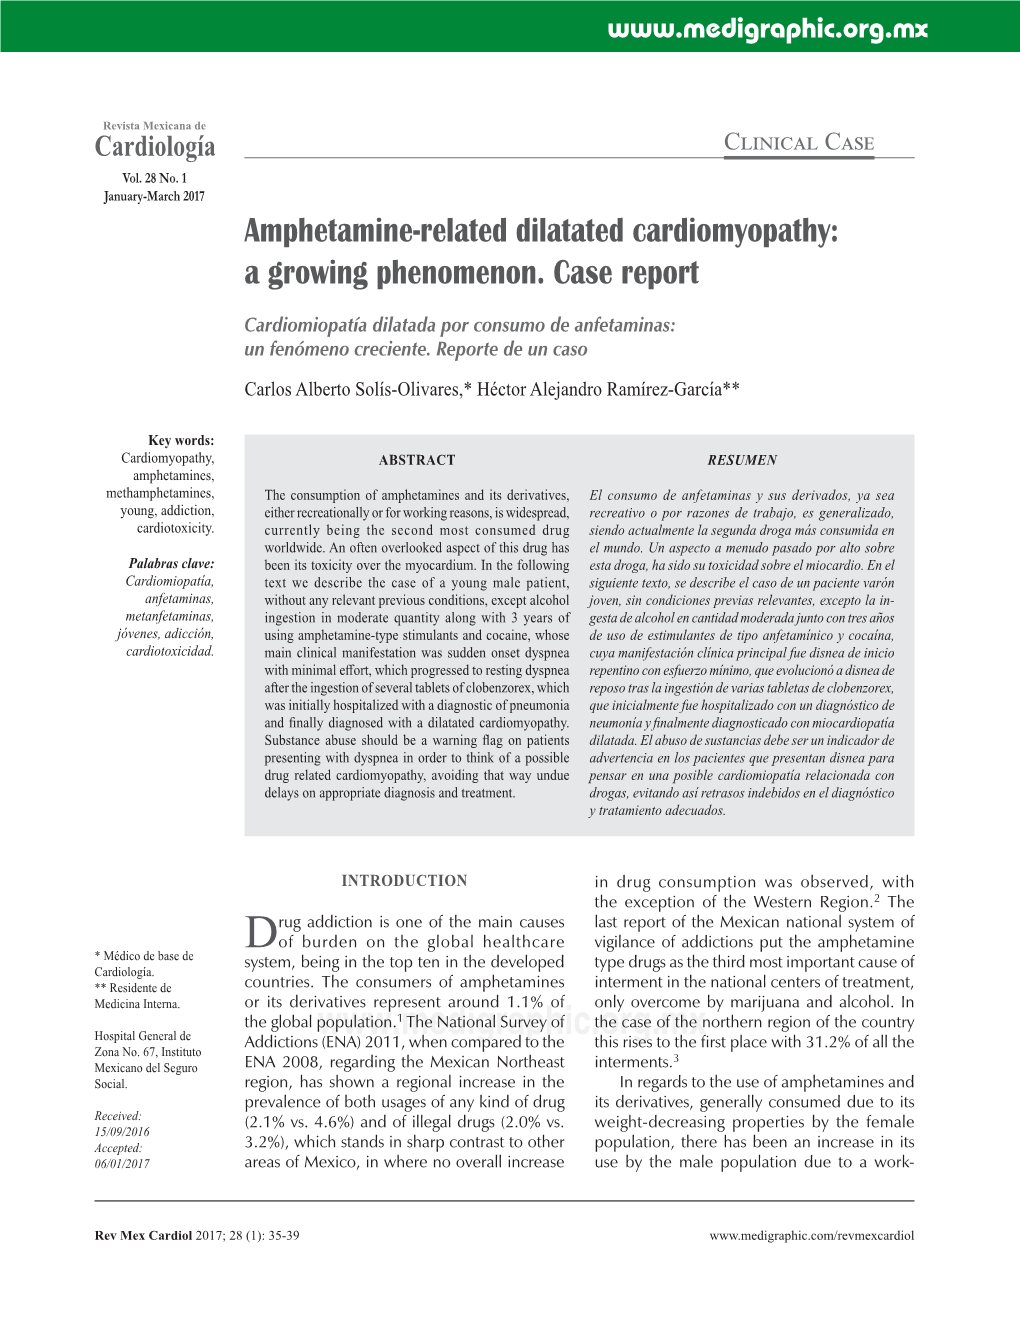 Amphetamine-Related Dilatated Cardiomyopathy: a Growing Phenomenon